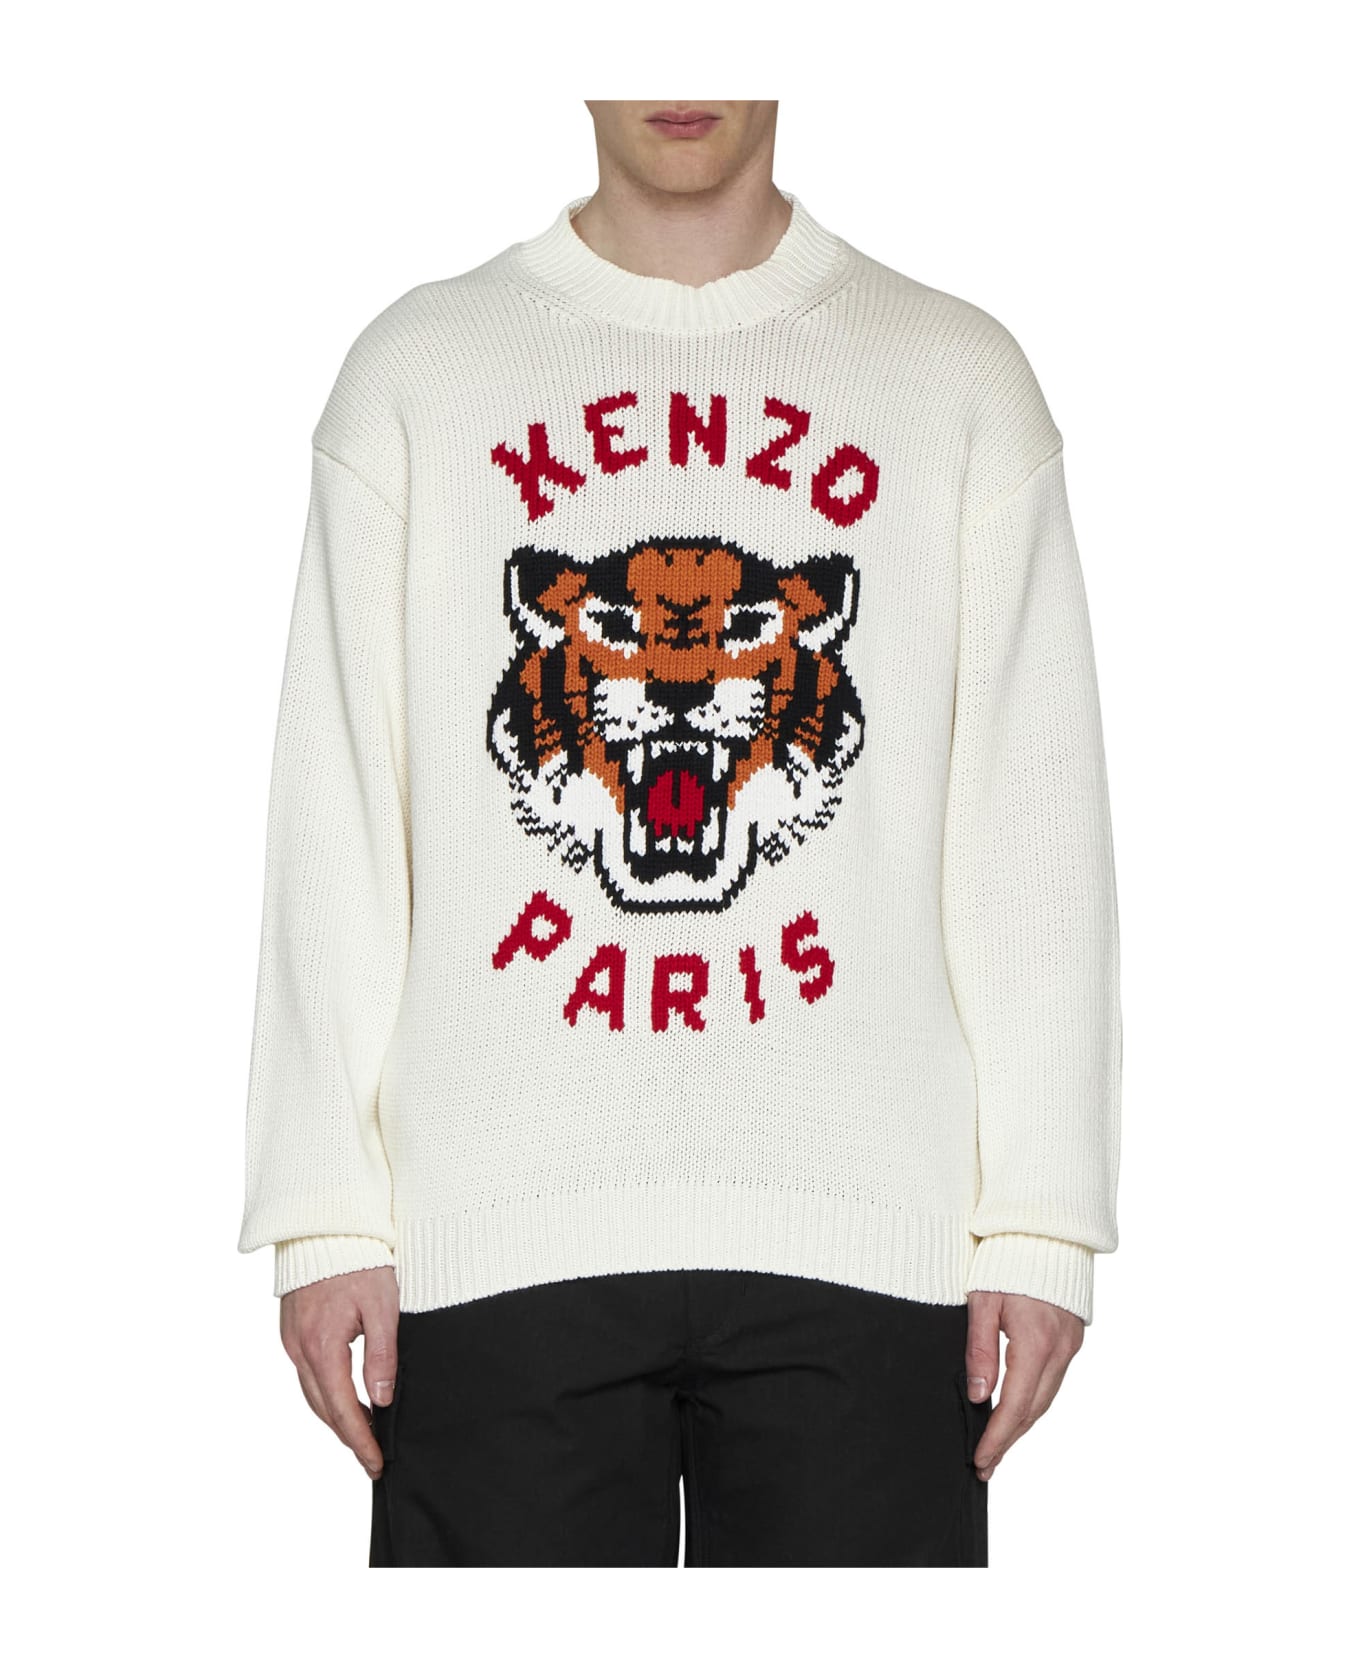 Kenzo Sweater - Off white